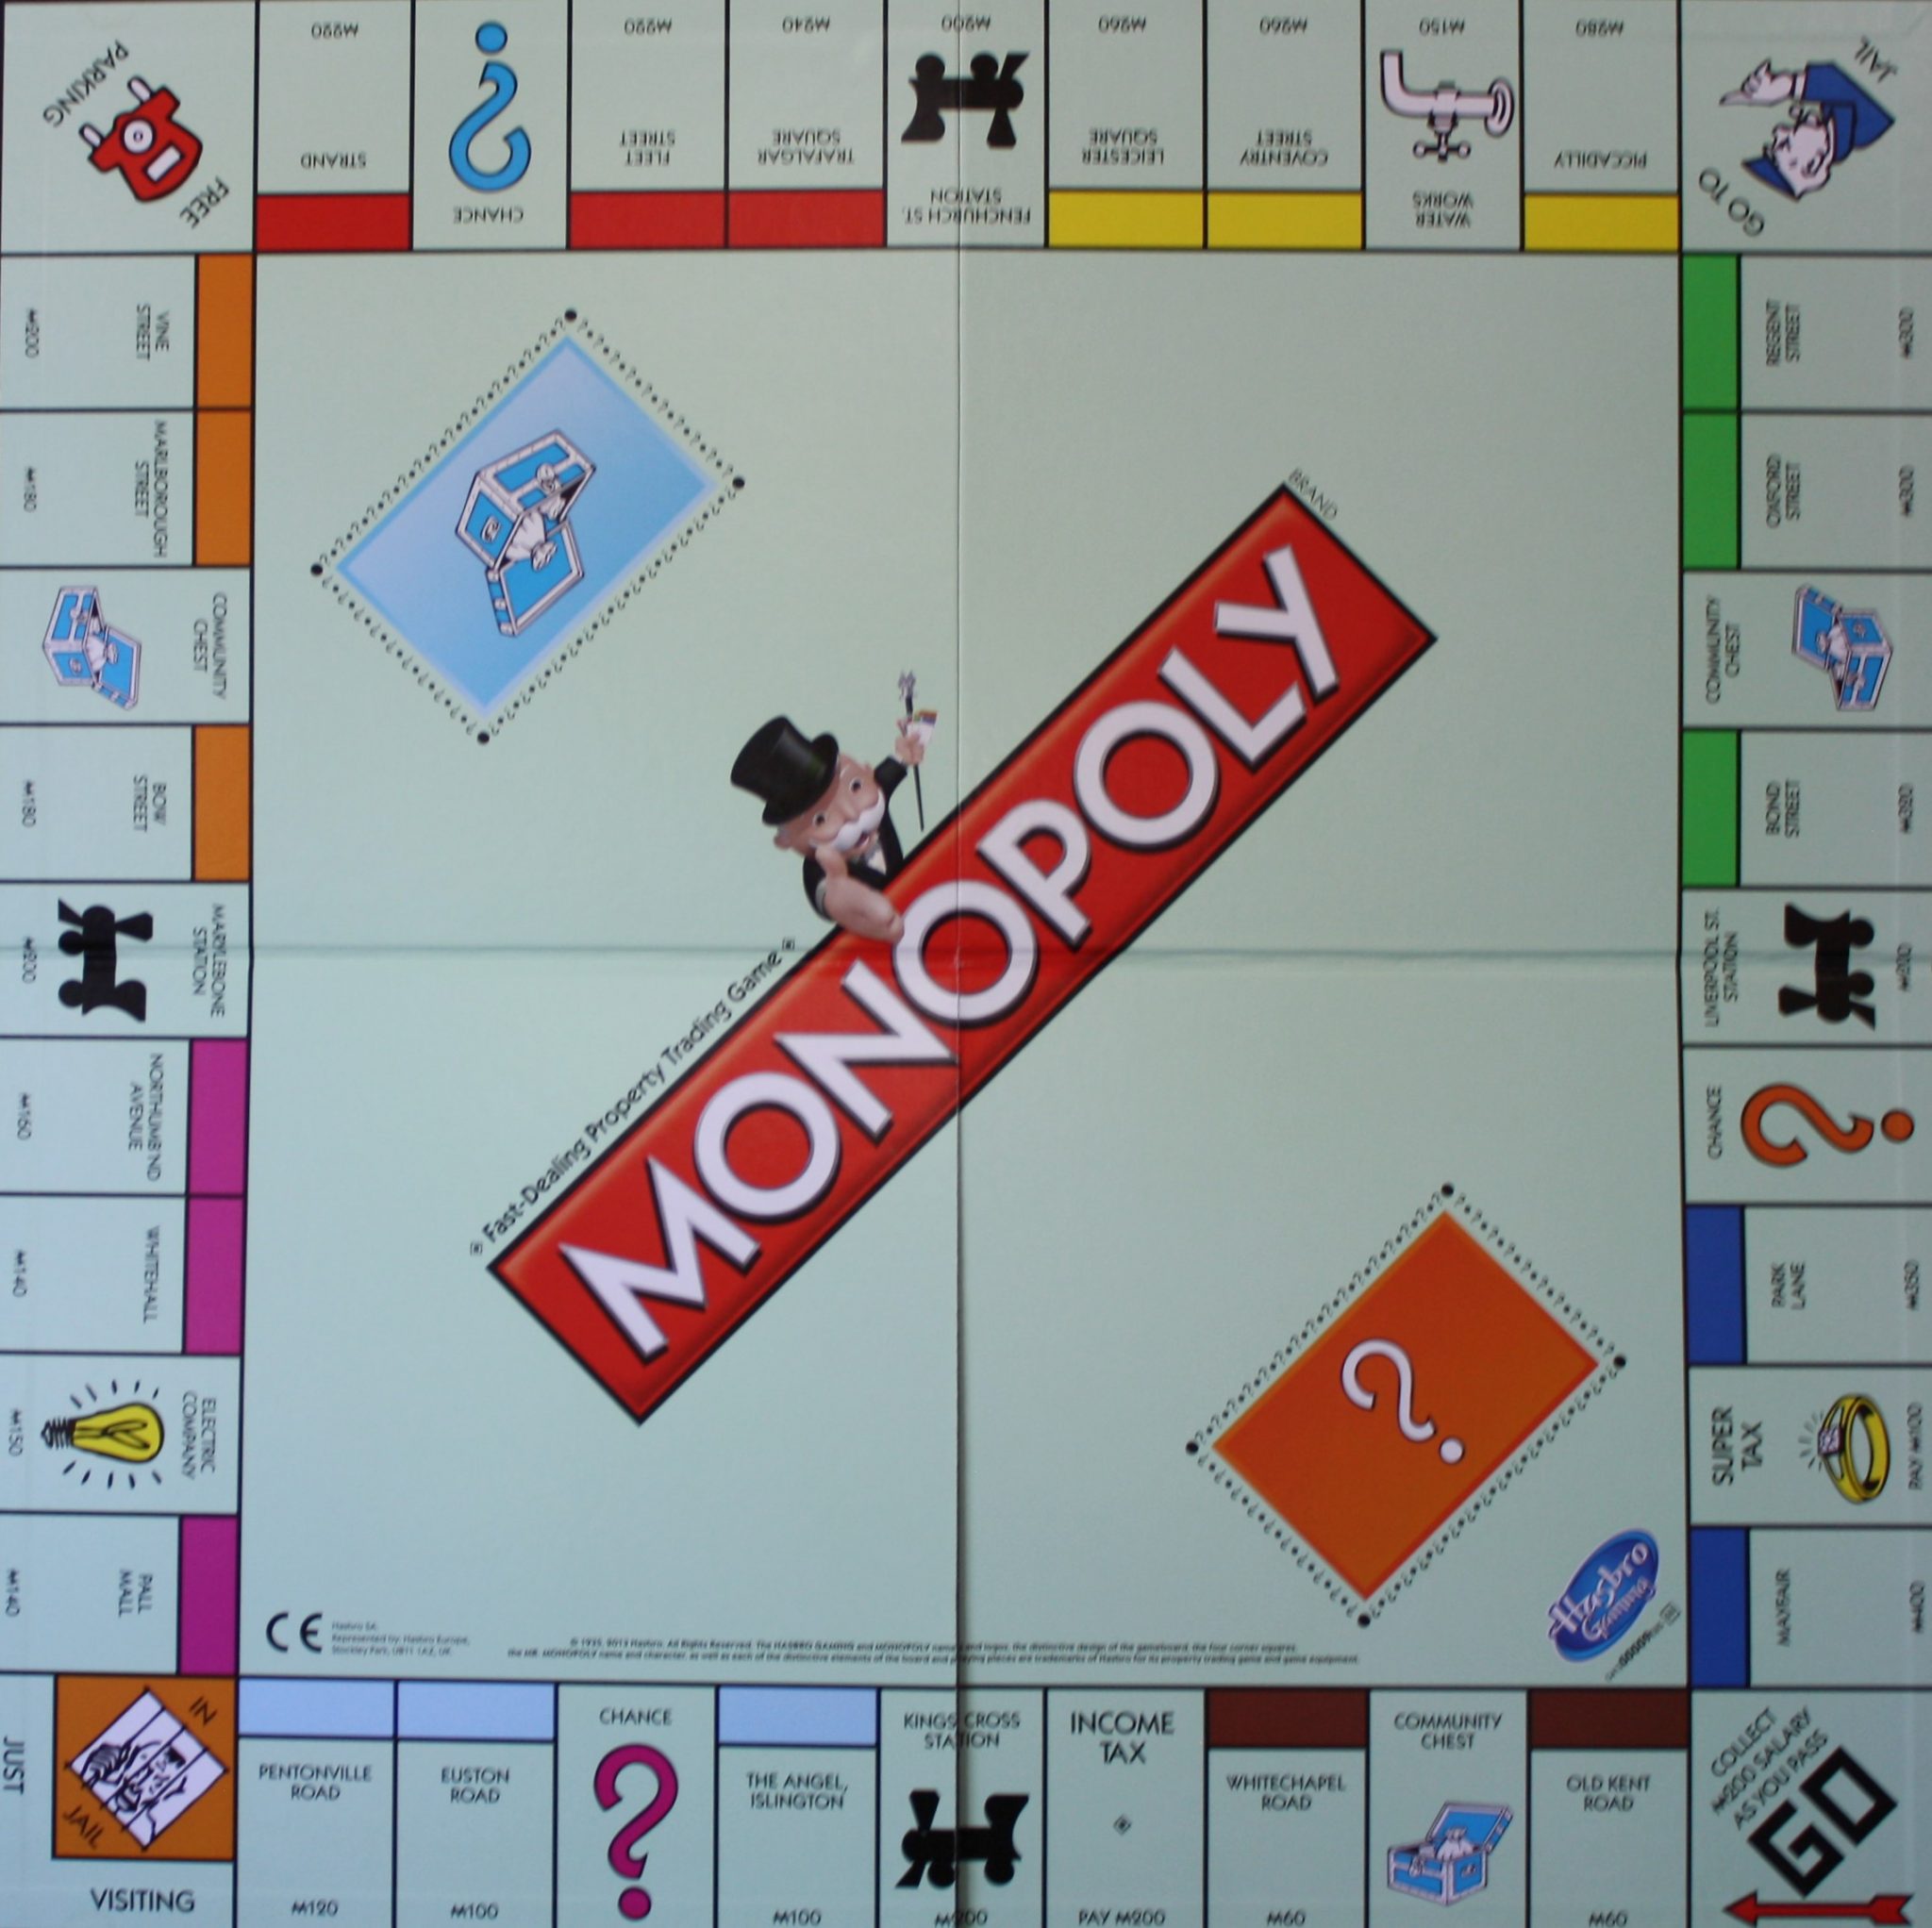 origins of monopoly board game